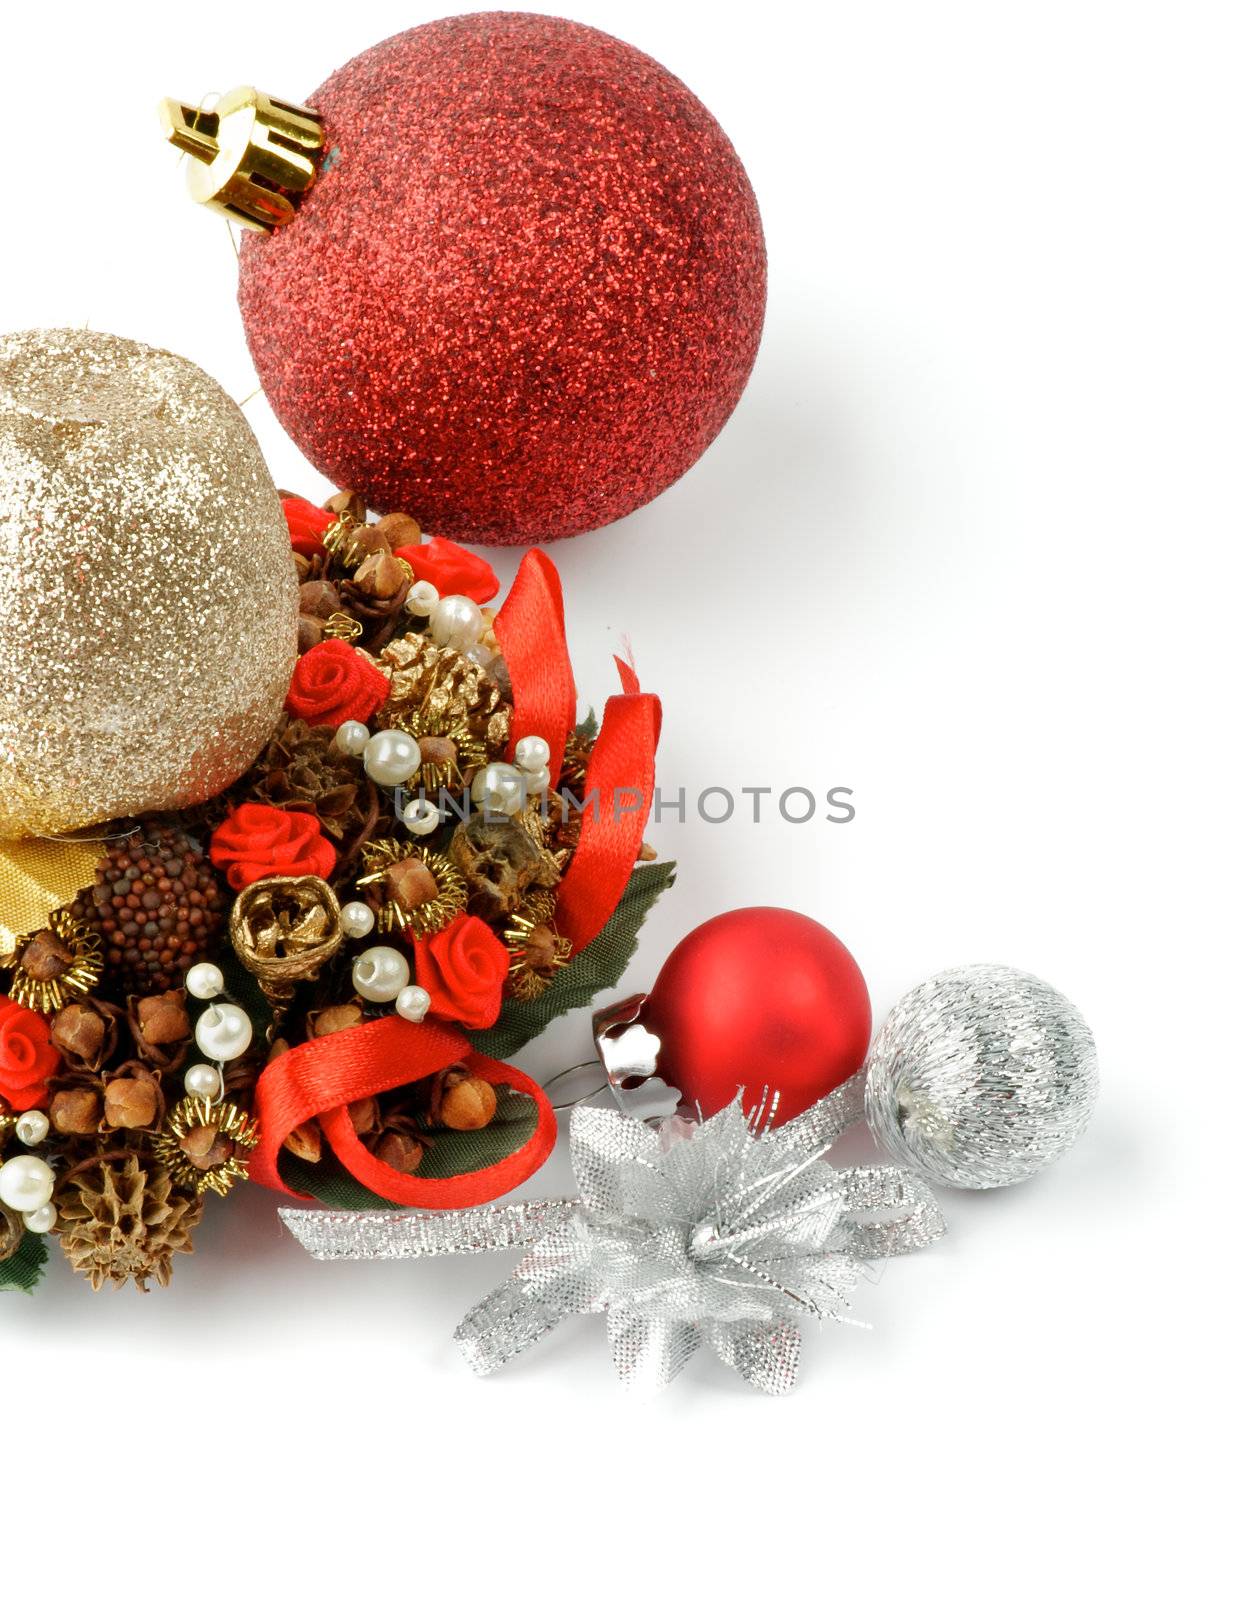 Christmas Decorations by zhekos